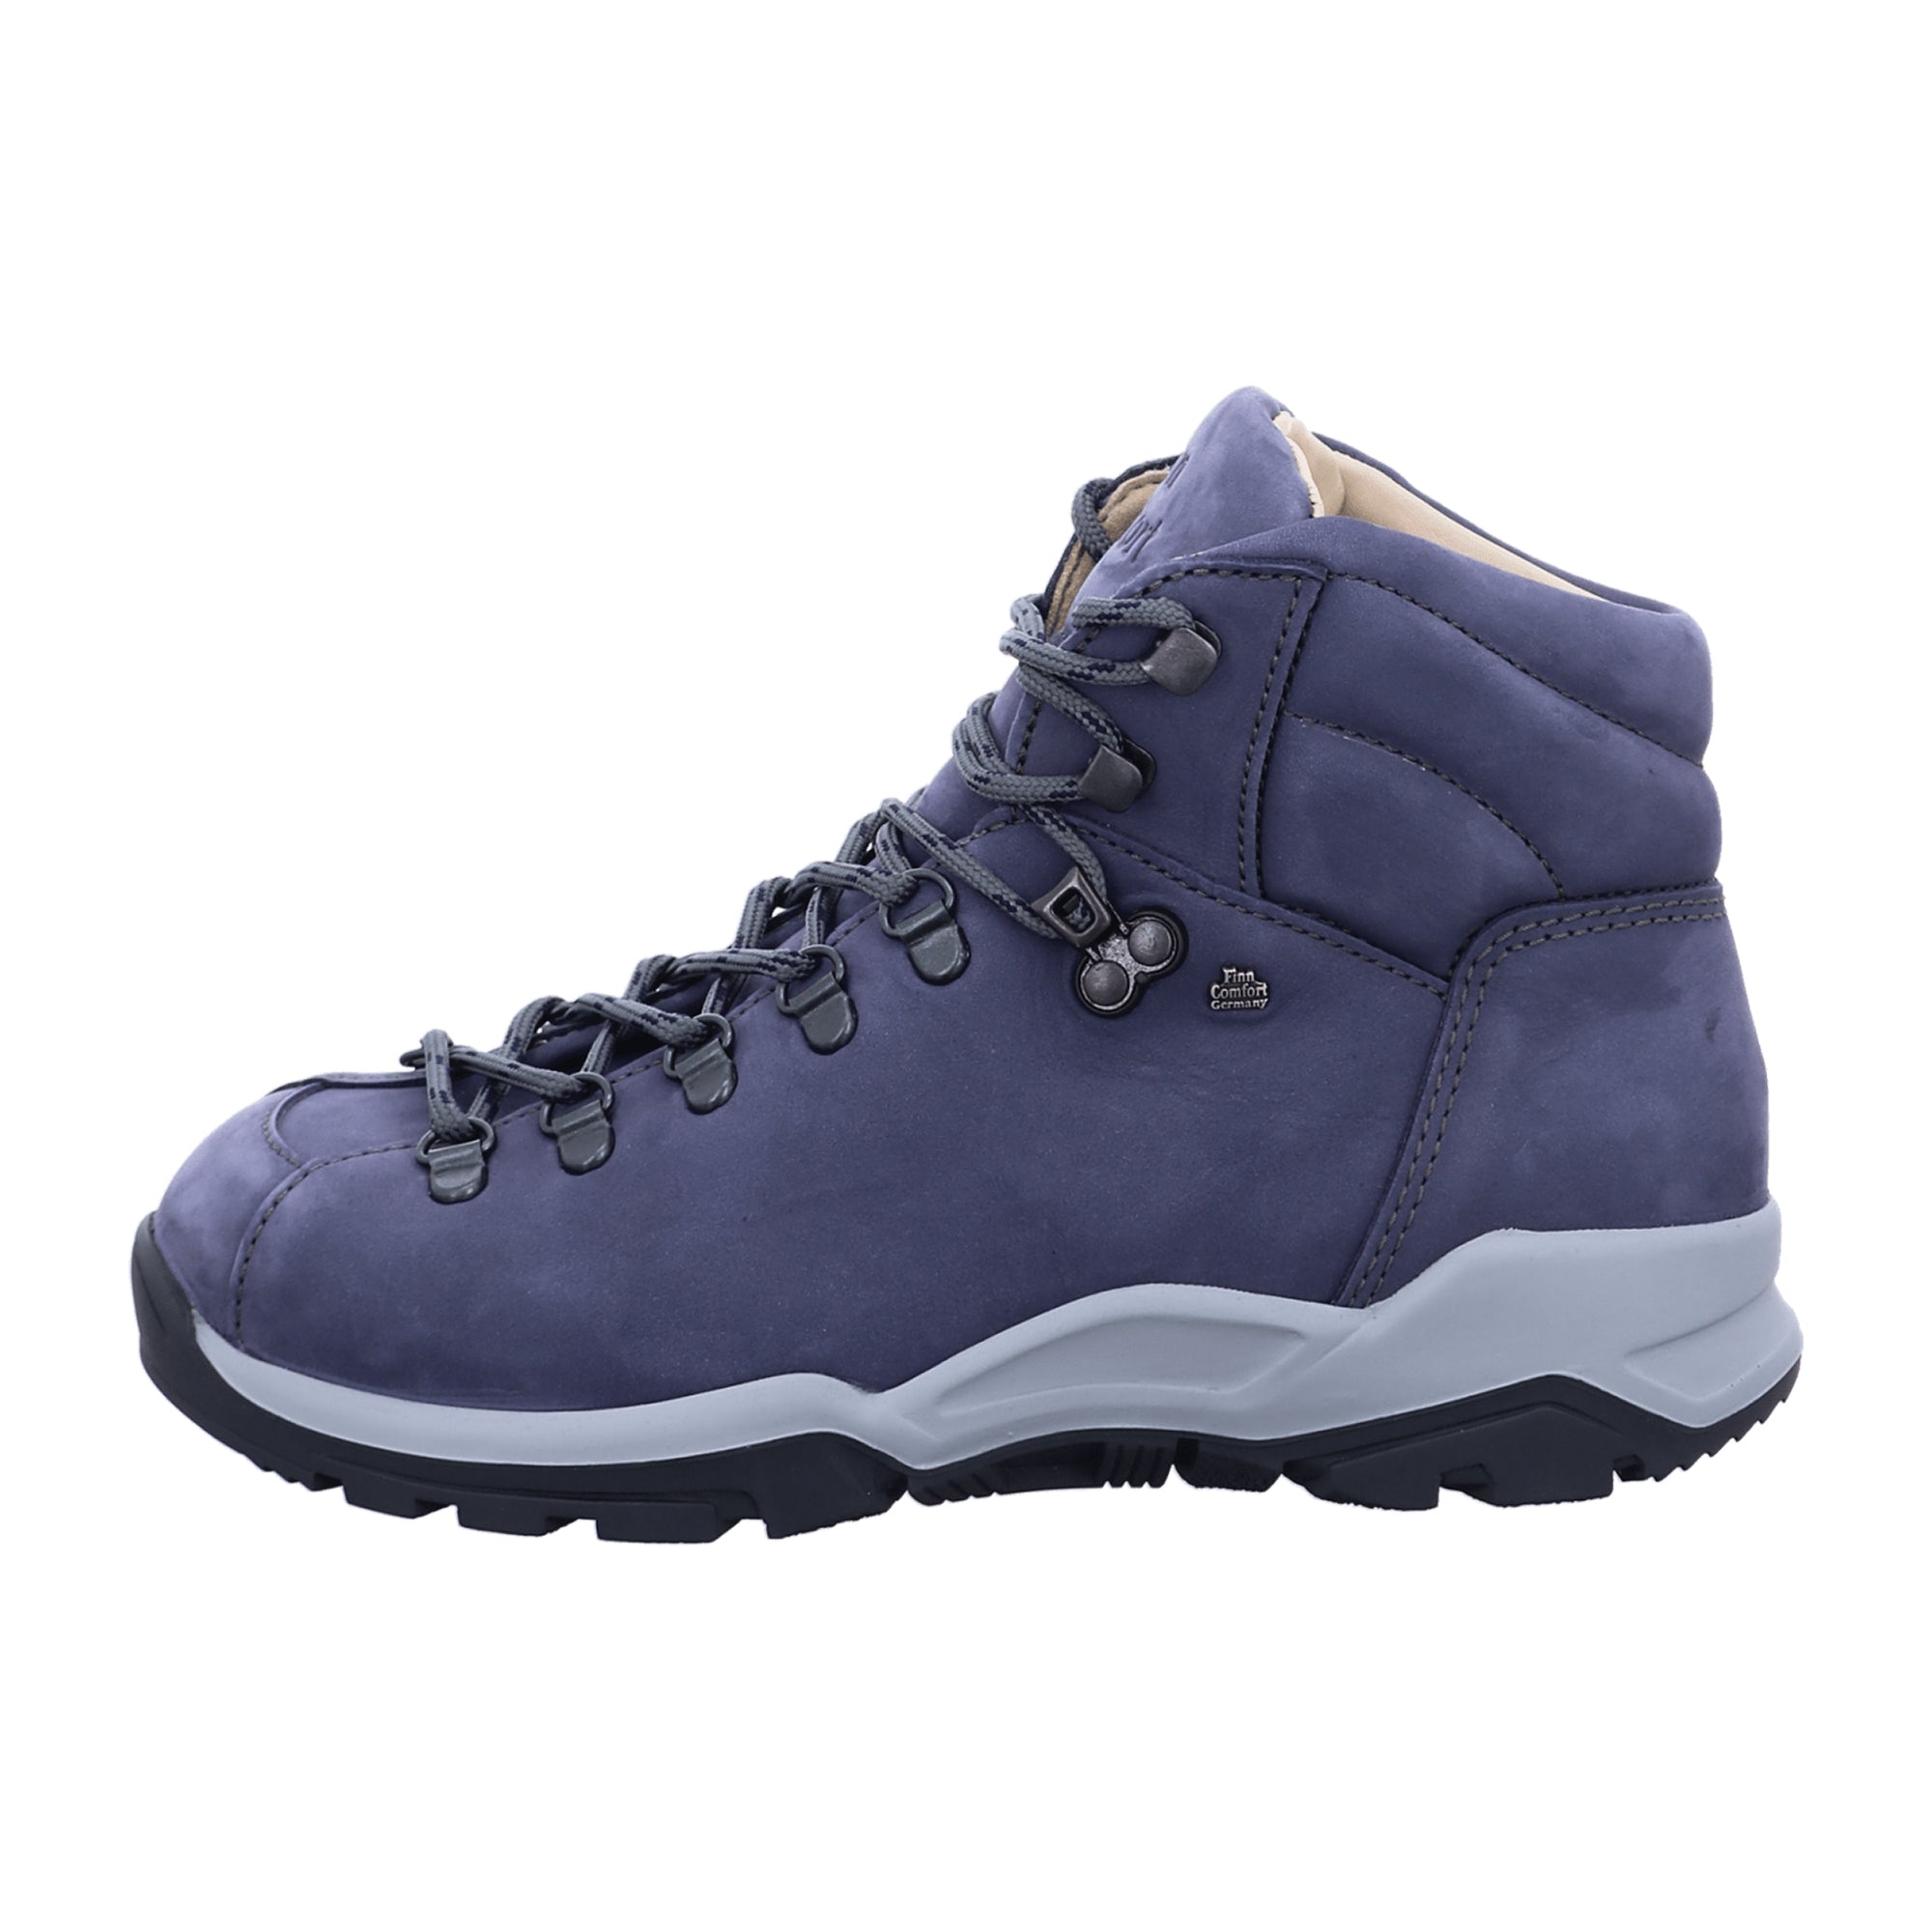 Finn Comfort Garmisch Women's Hiking Boots - Marine Blue Nubuck Leather, Orthopedic Support